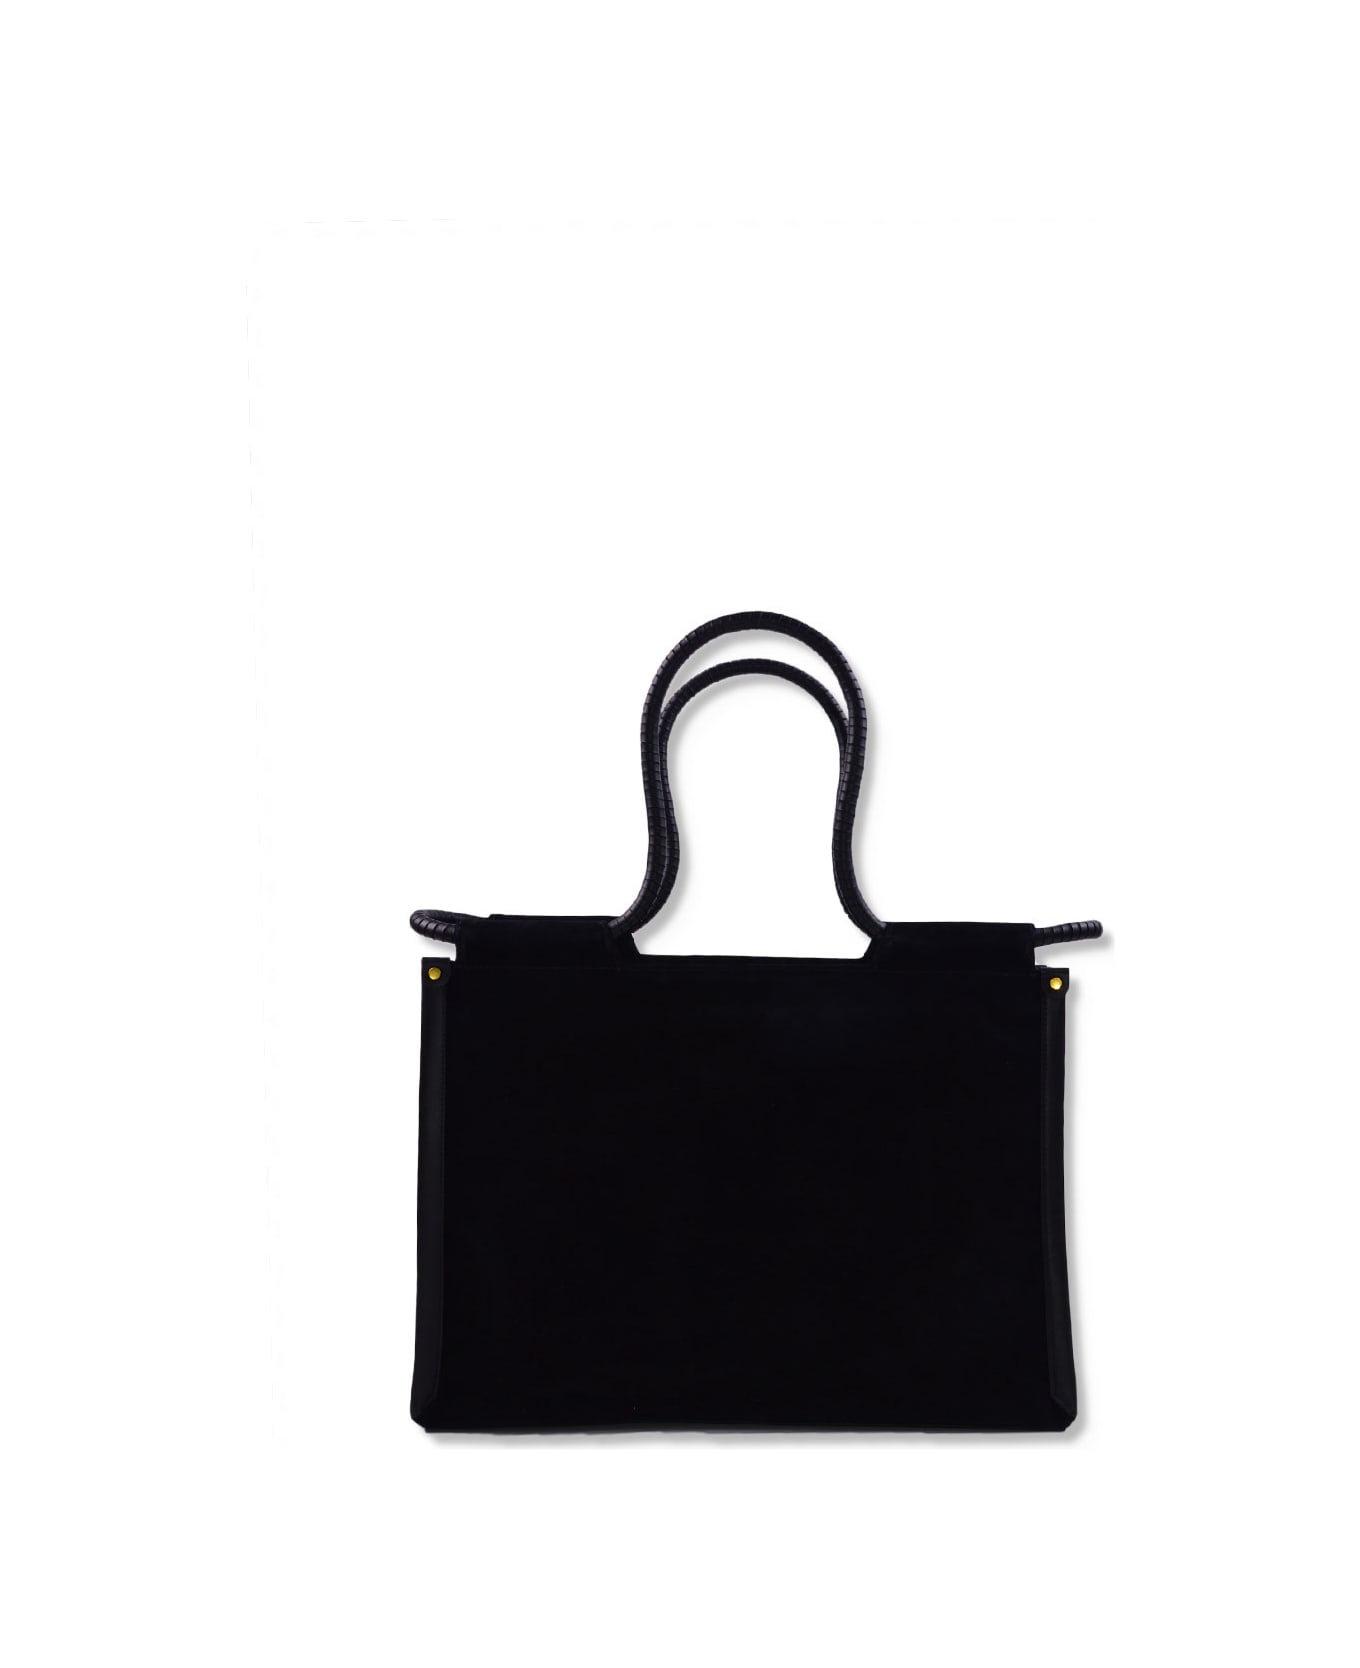 Isabel Marant Handbag - Black